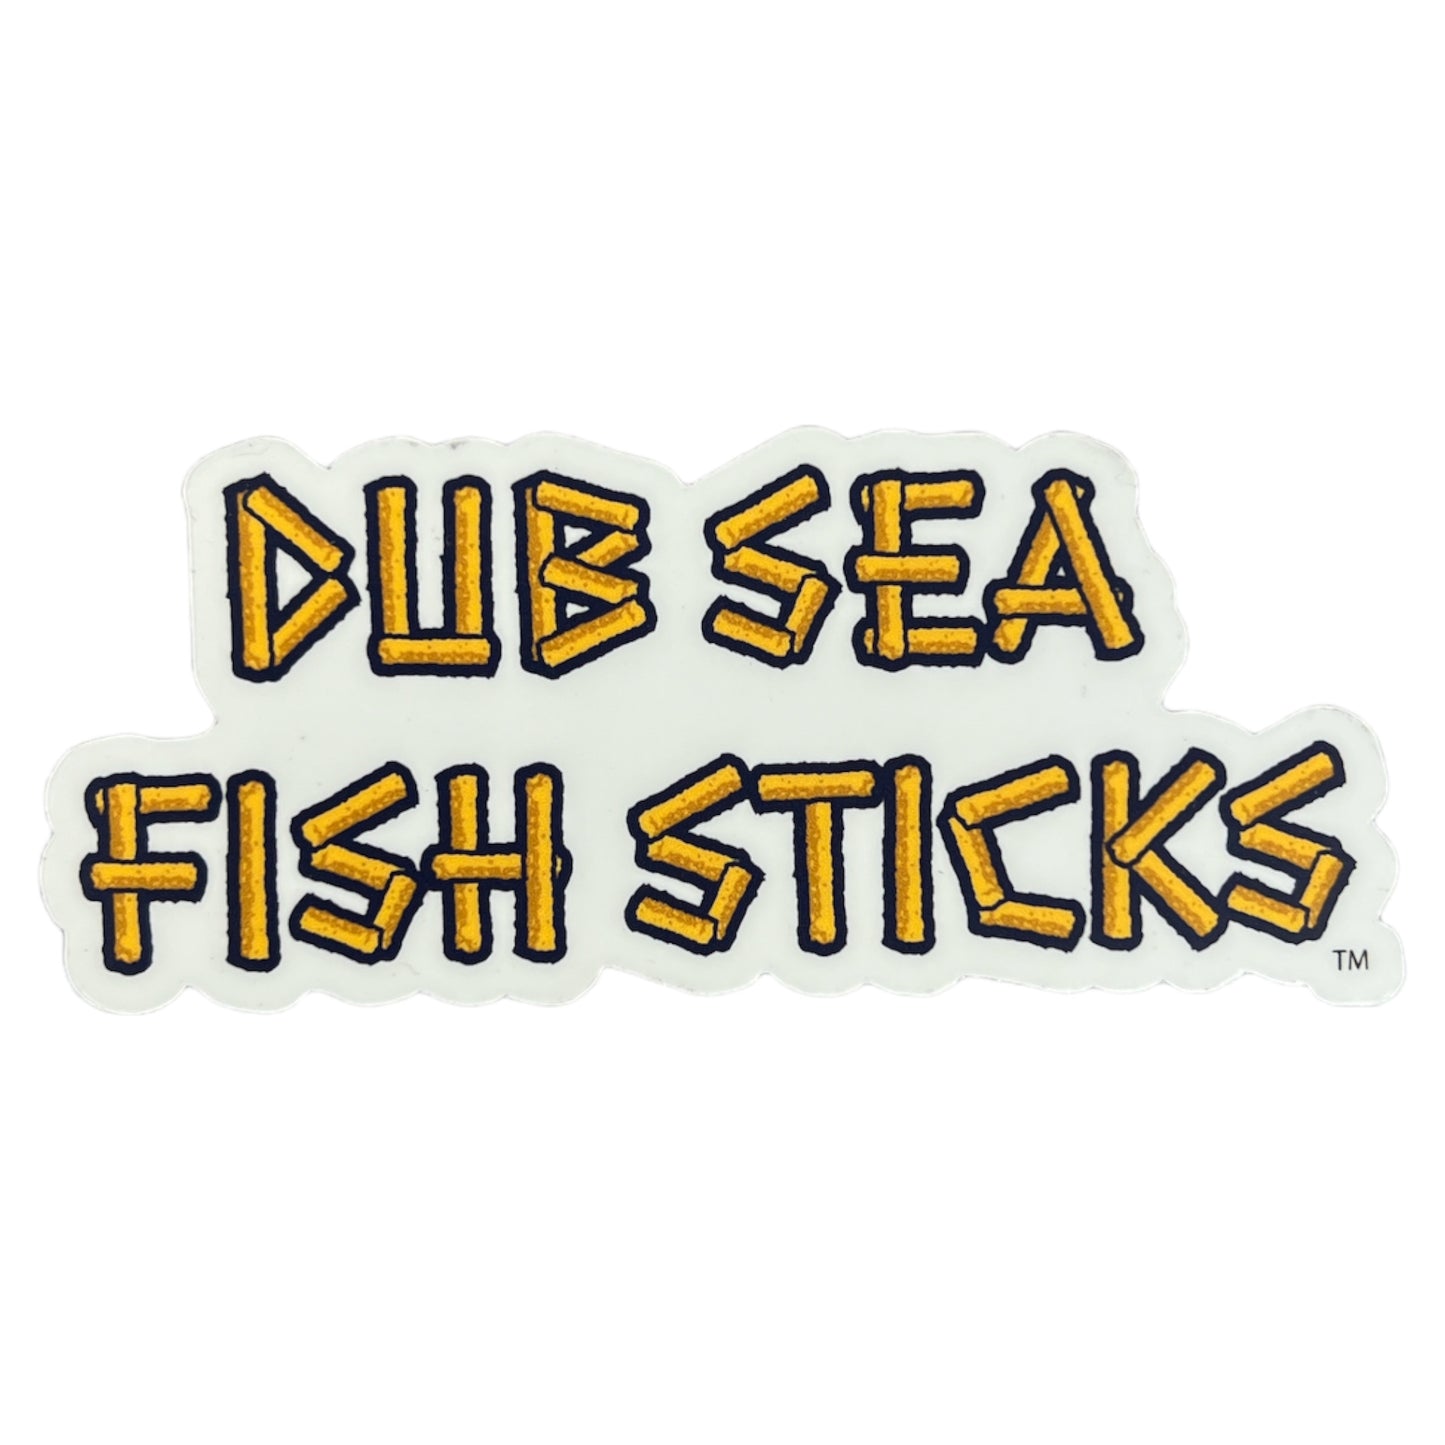 Dubsea_Fish_Sticks_Word_Sticker